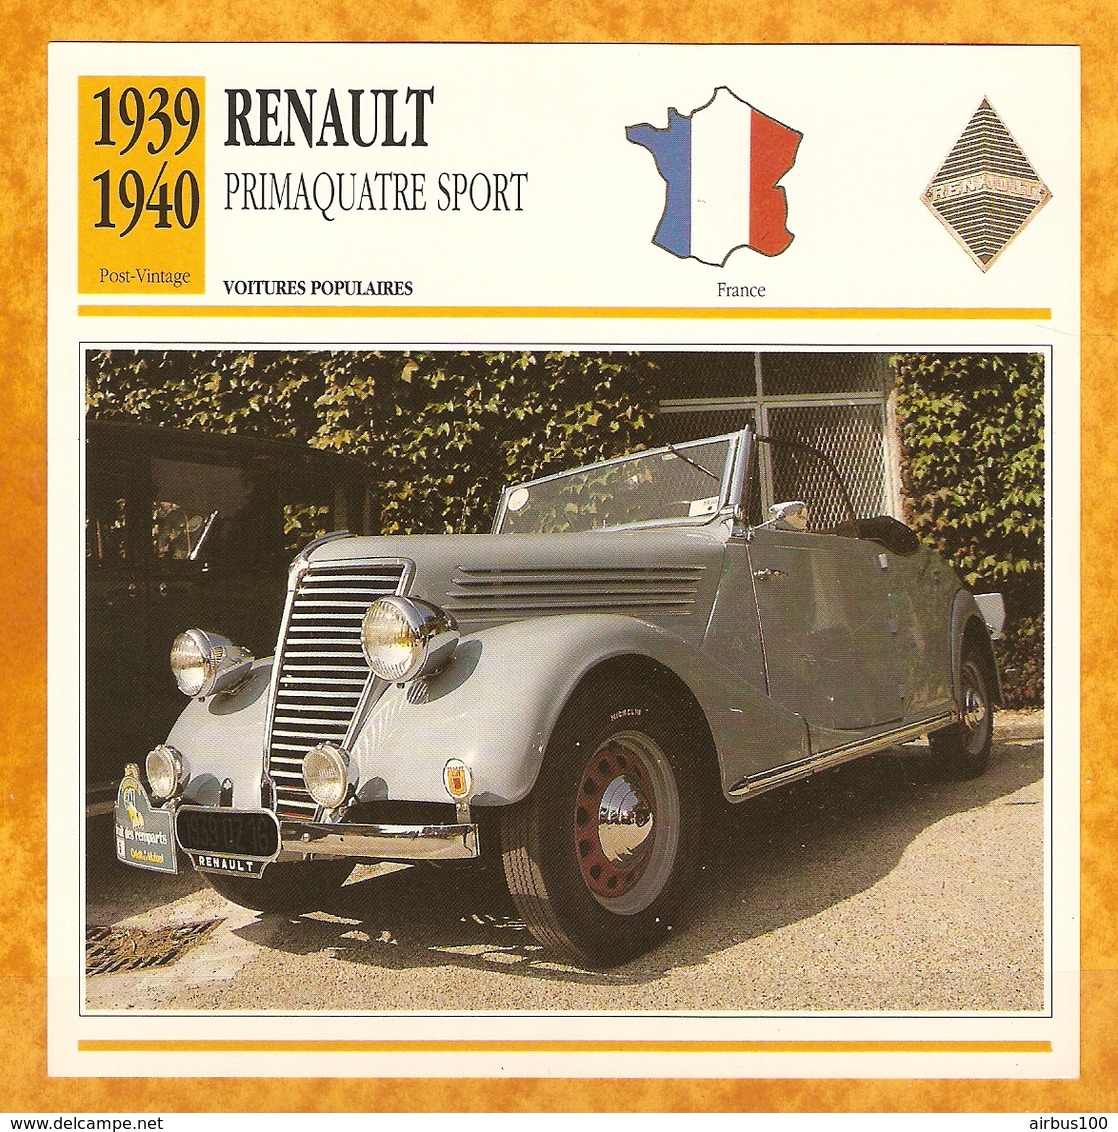 1939 FRANCE VIEILLE VOITURE RENAULT PRIMAQUATRE SPORT - FRANCE OLD CAR - FRANCIA VIEJO COCHE - VECCHIA MACCHINA - Coches